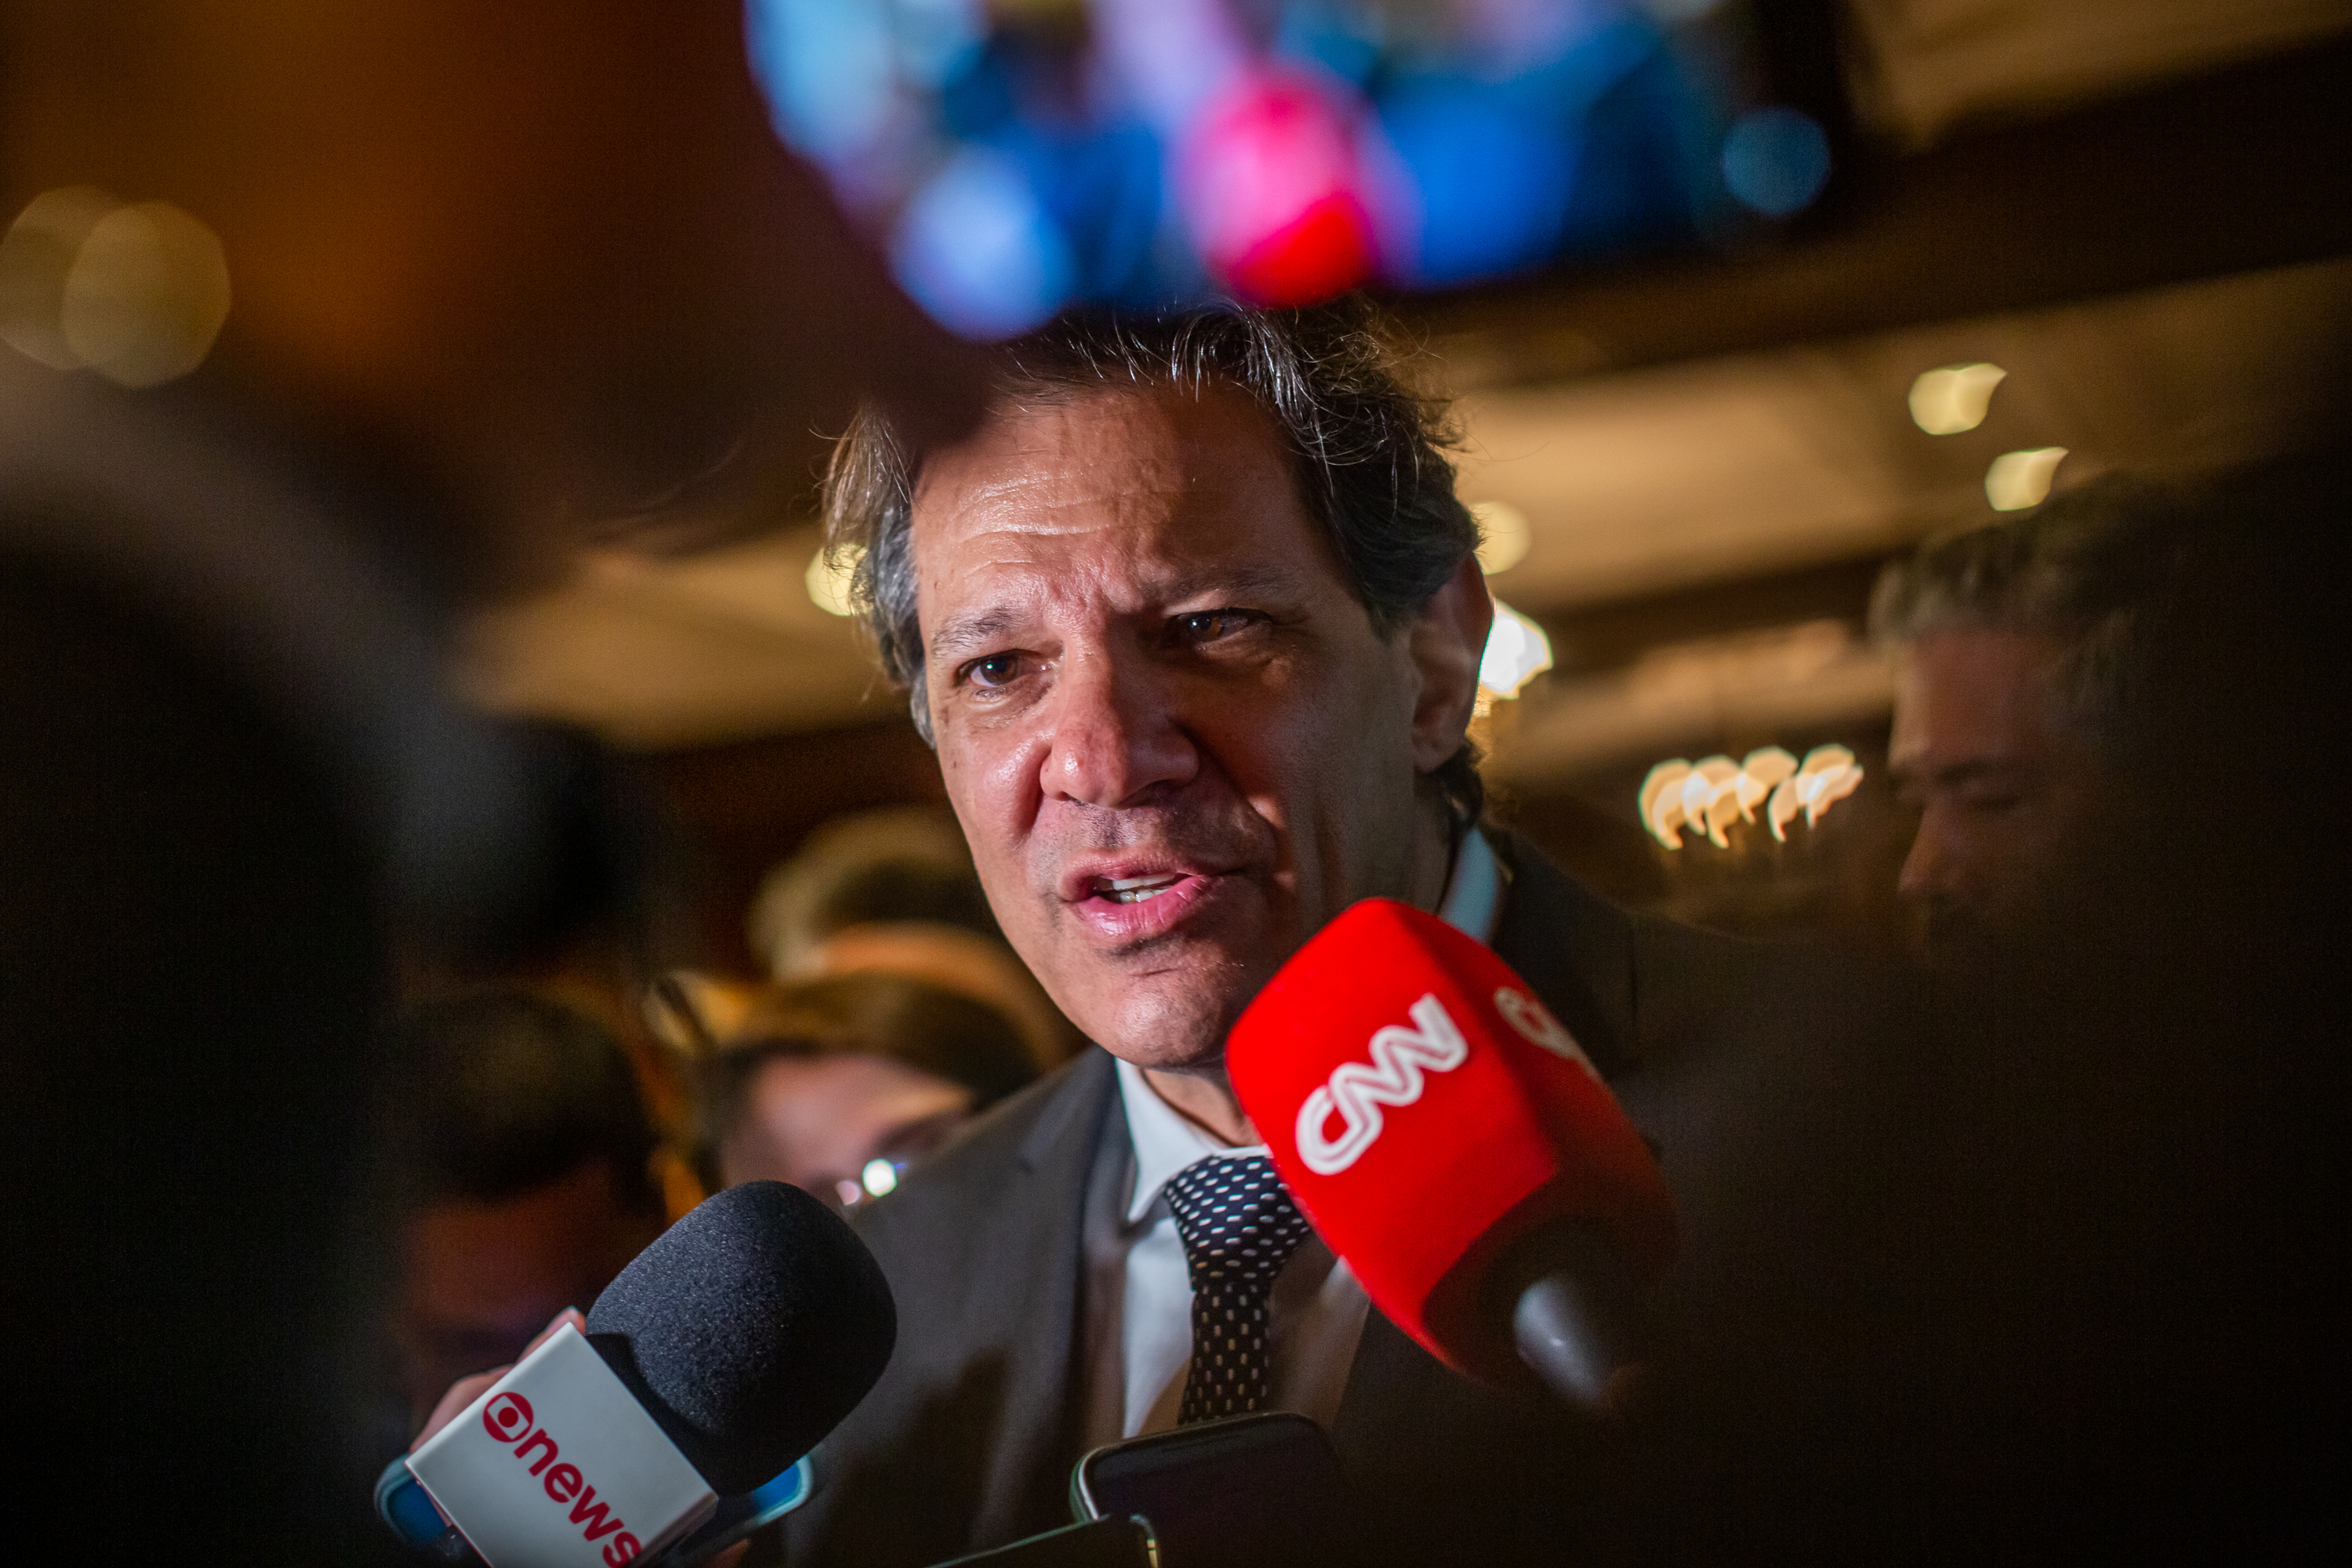 Mercosul está ameaçado por narrativas na Argentina, diz Haddad